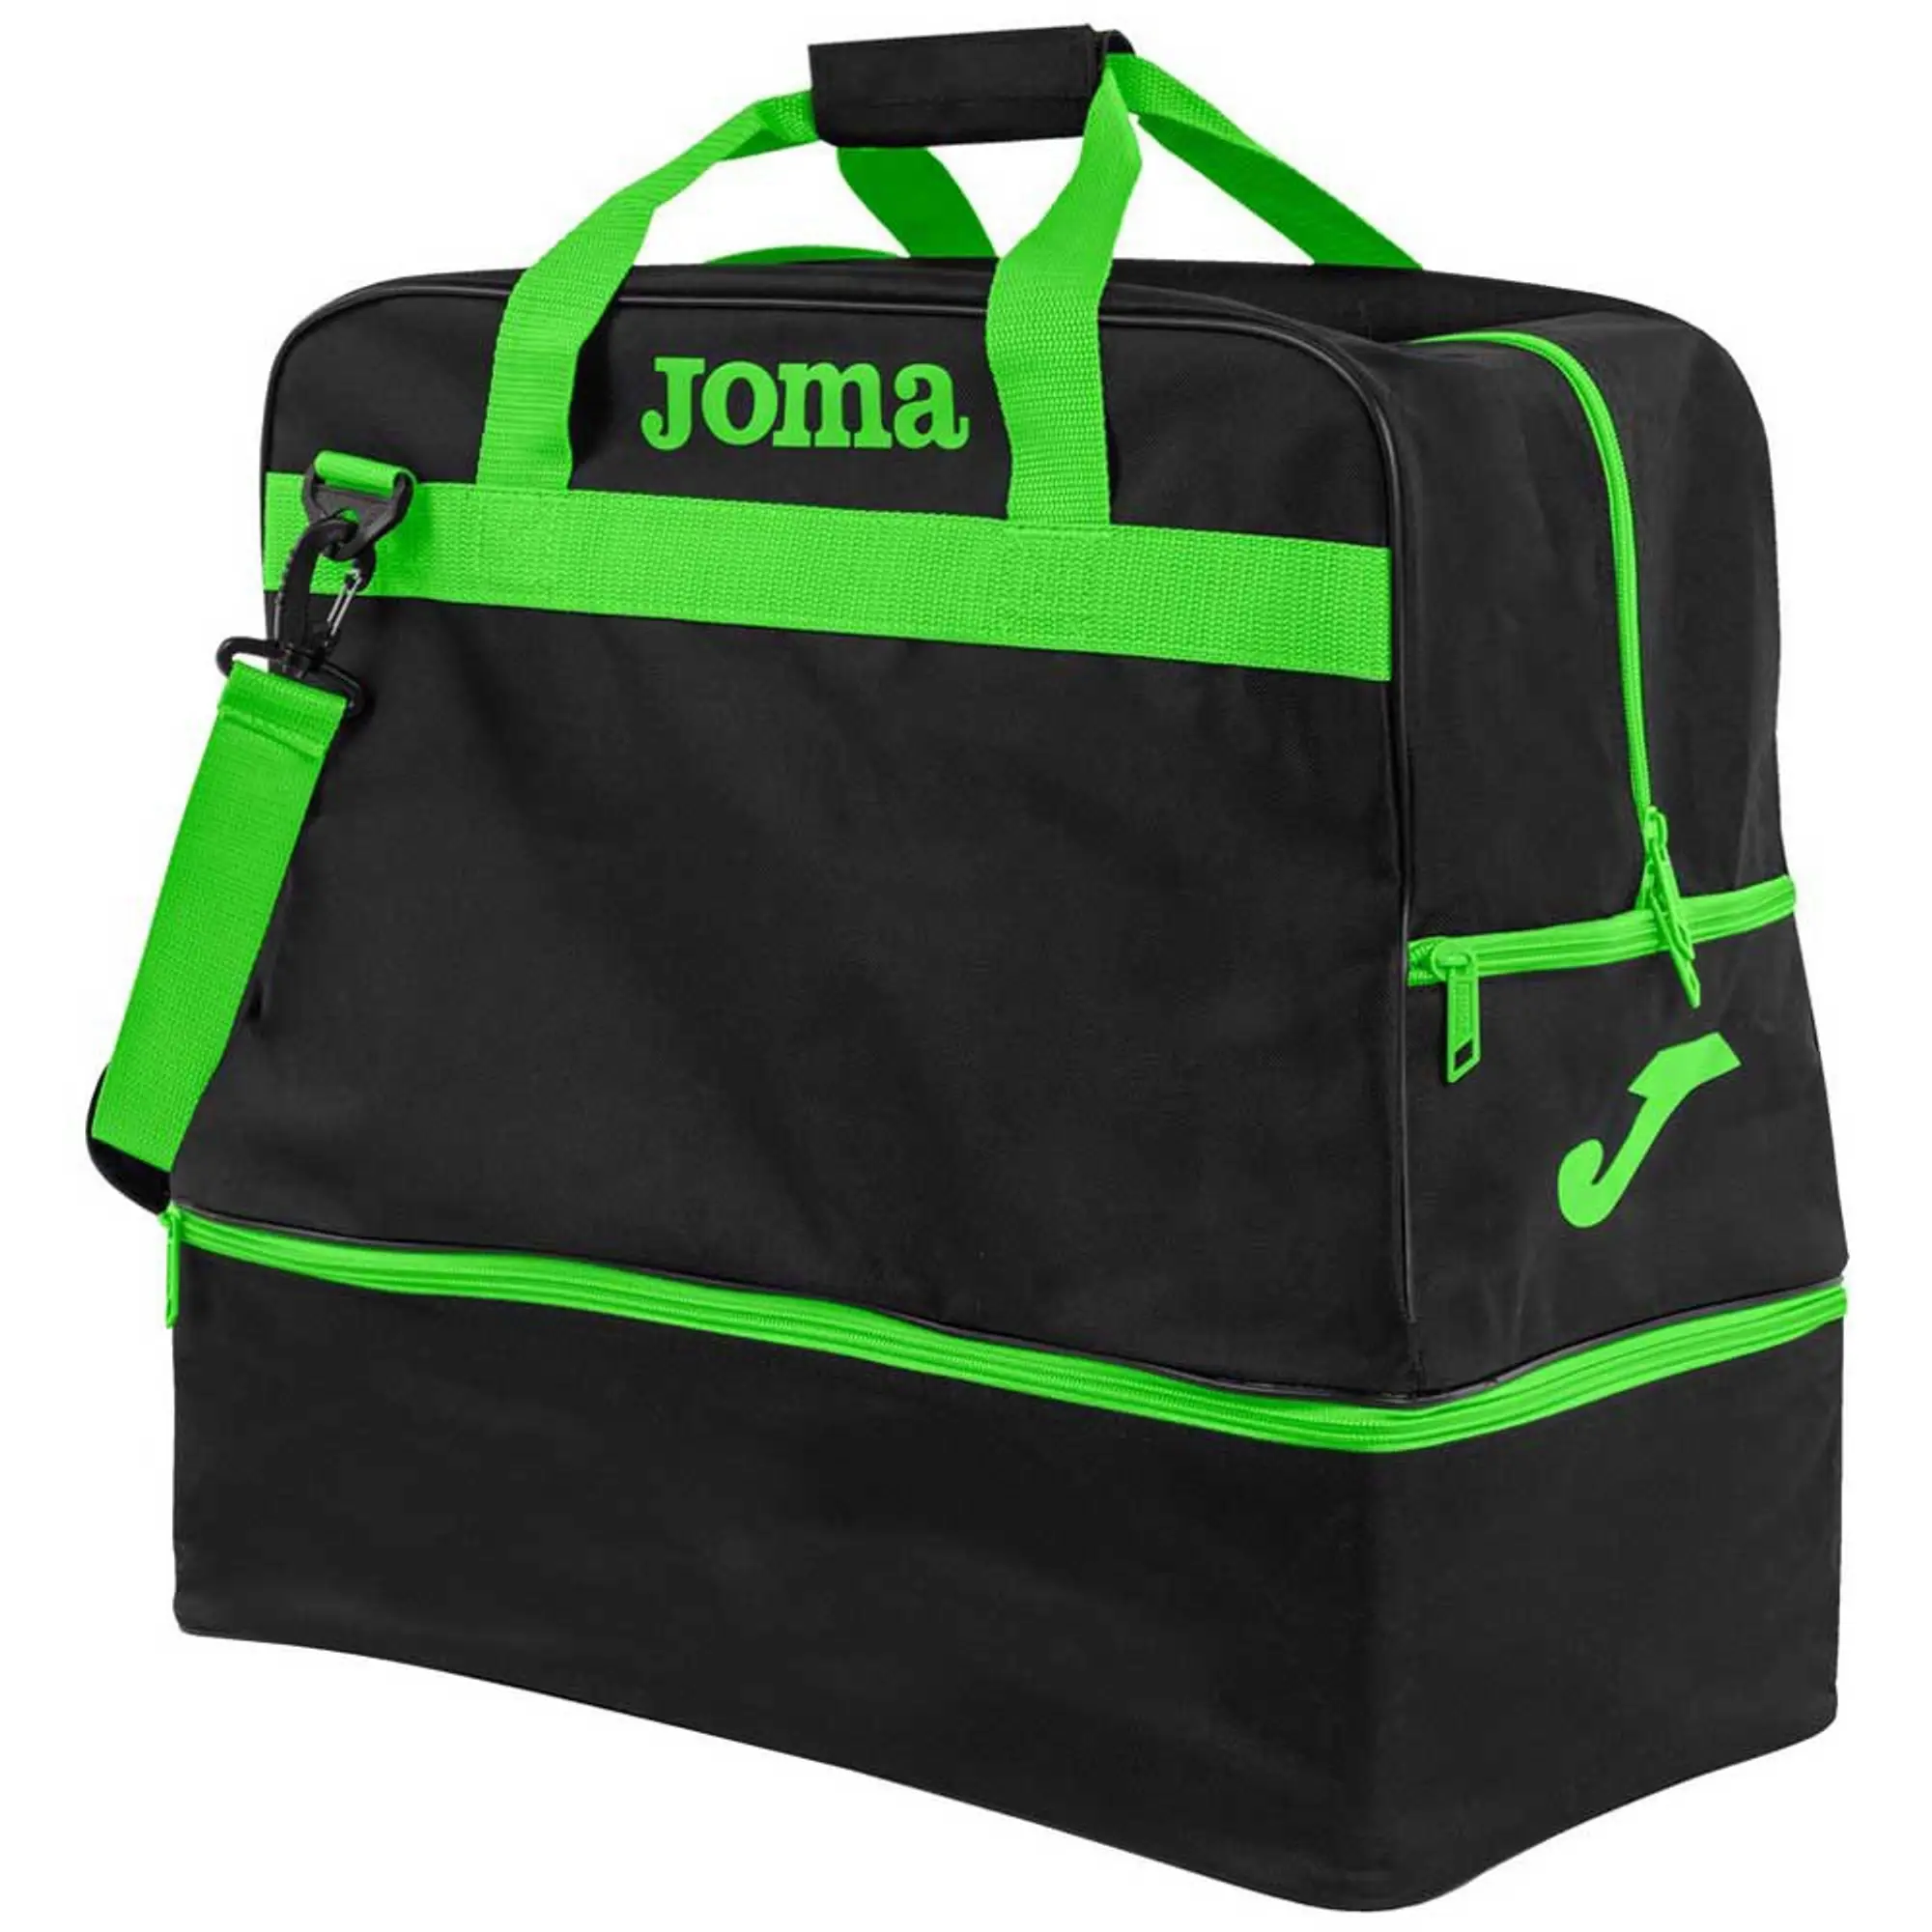 Joma Training S Bag  - Black